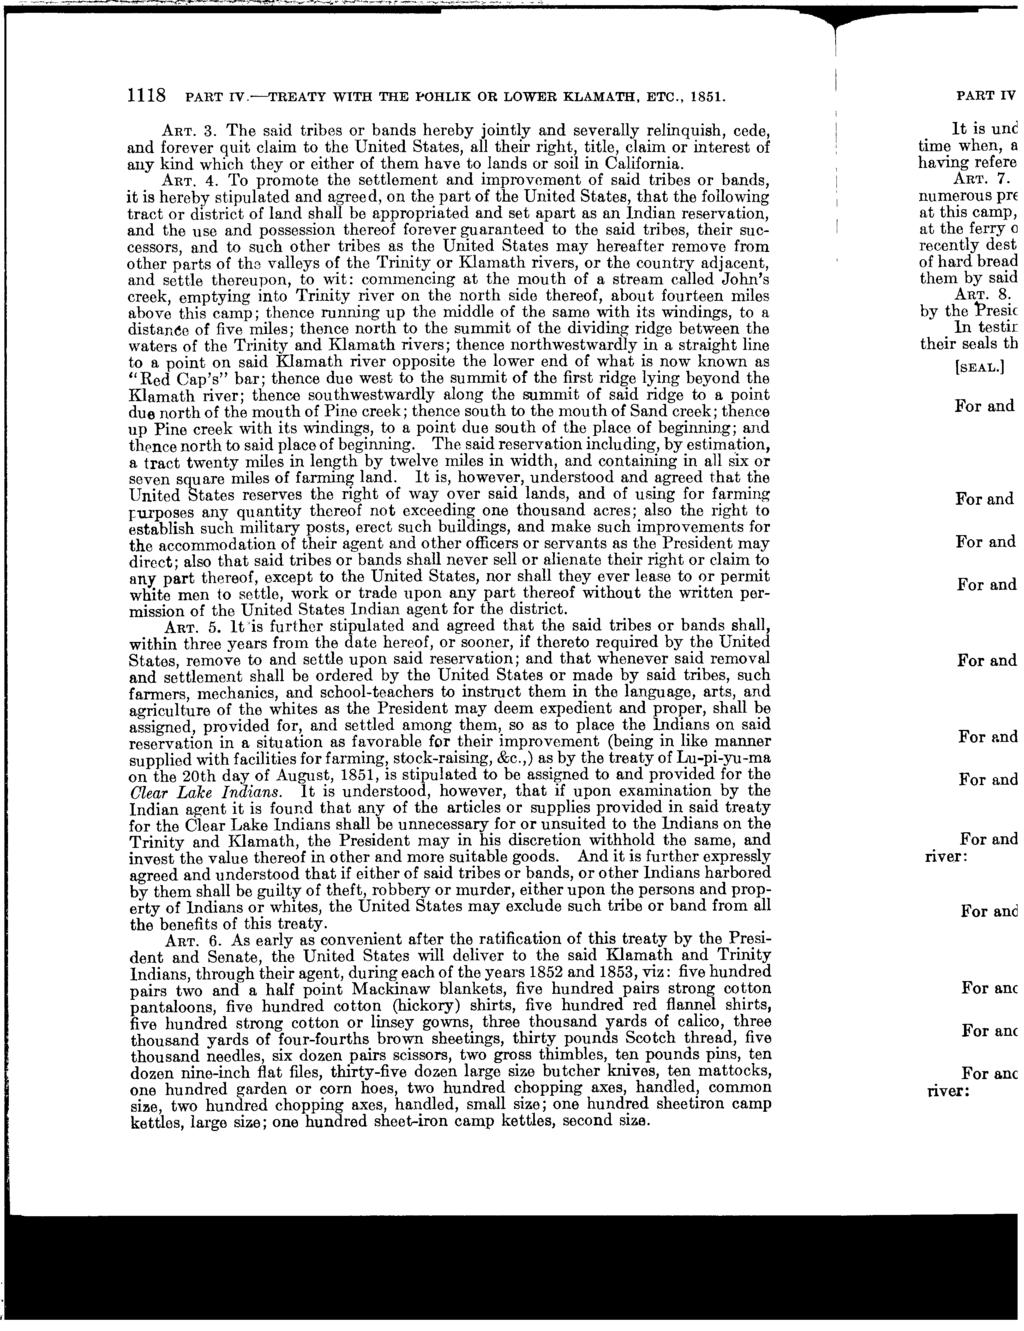 1118 PART IV.-TREATY WITH THE POHLIK OR LOWER KLAMATH, ETC., 1851. ART. 3.